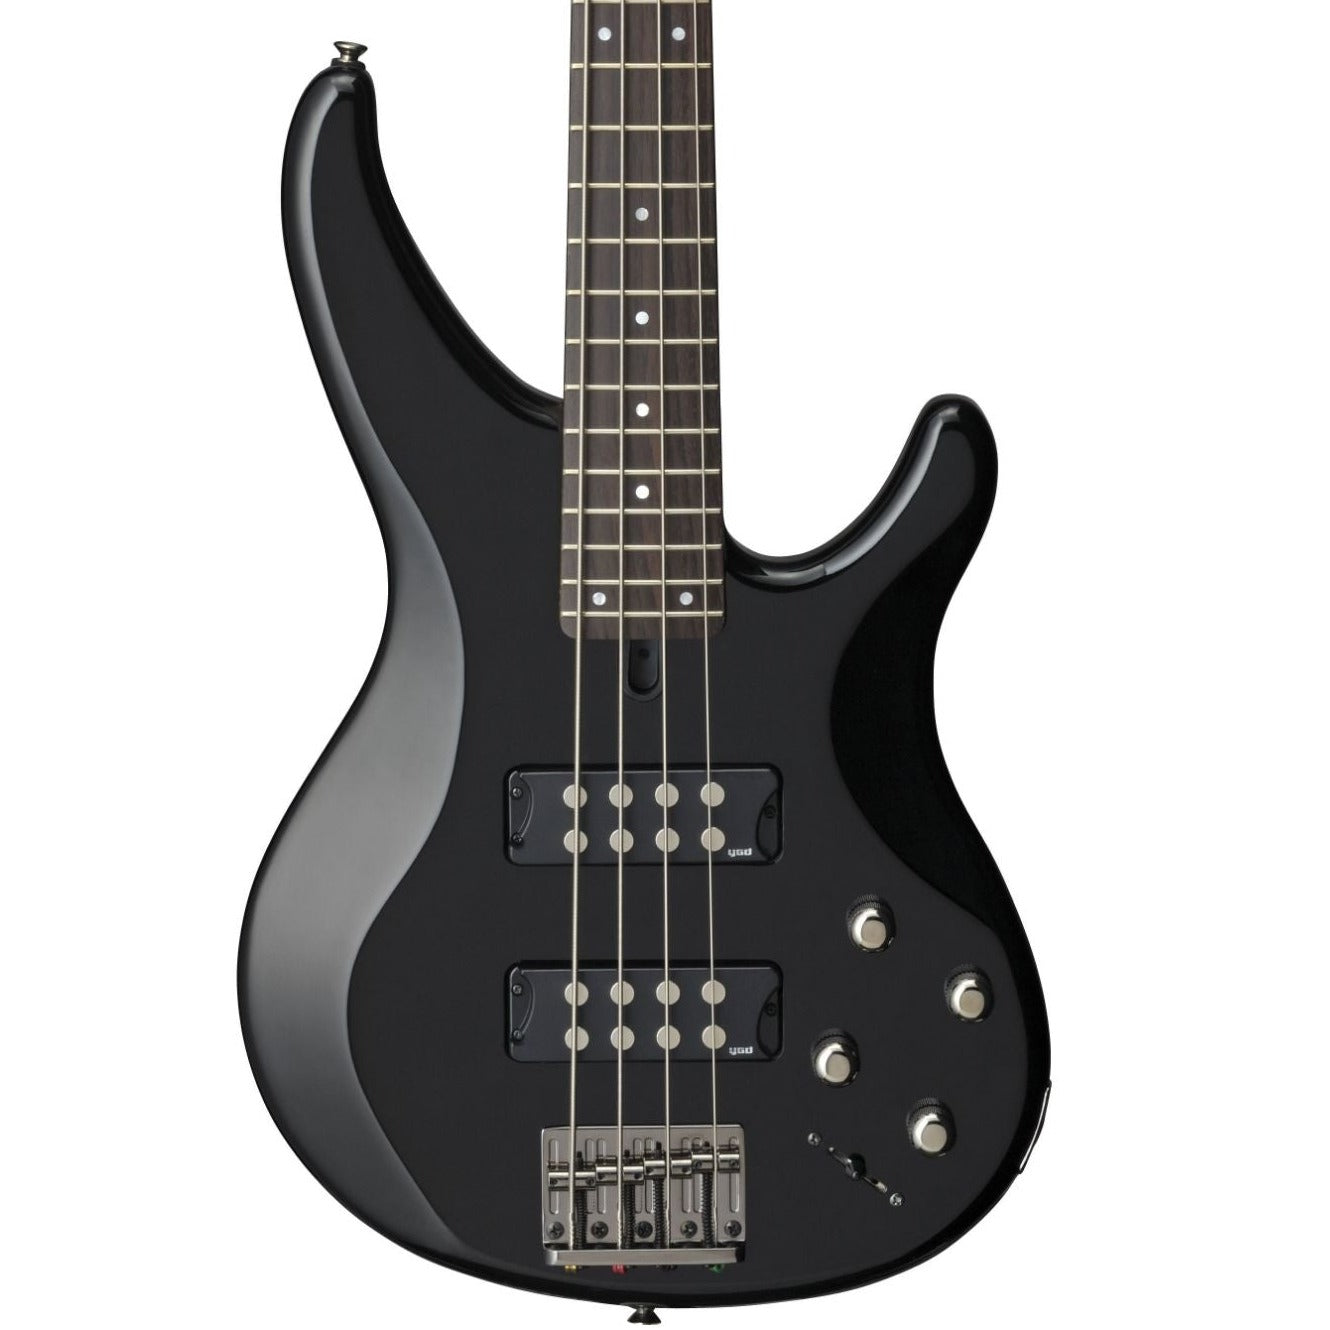 Yamaha TRBX304 Bass Guitar, Black